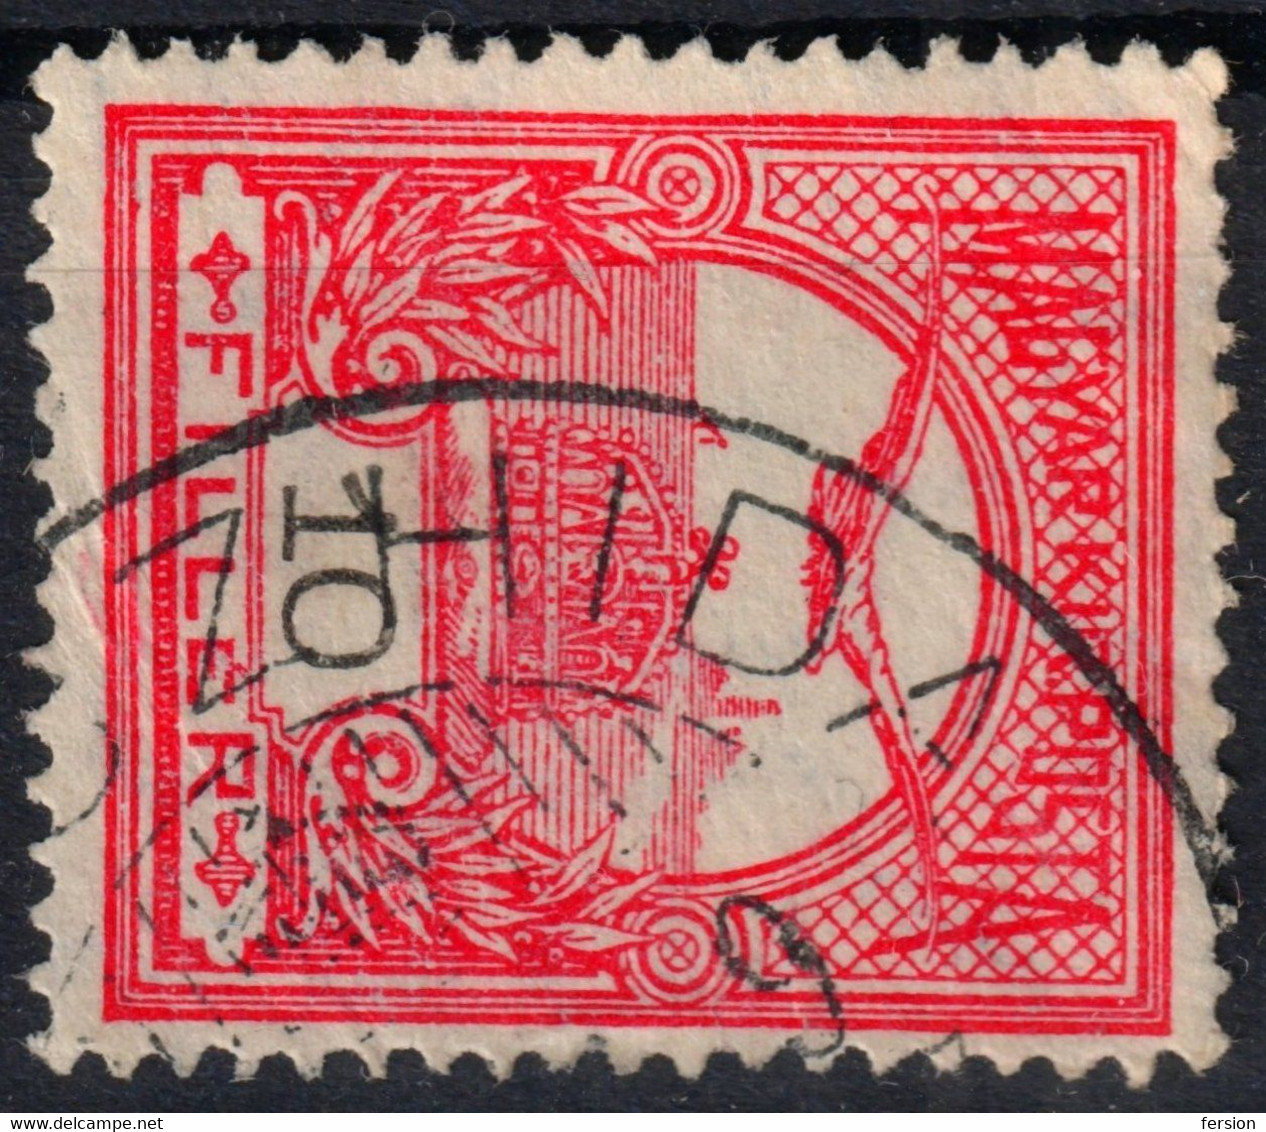 BONCZHIDA Bonțida Postmark / TURUL Crown 1910's Hungary Romania Banat Transylvania KOLOZS County KuK K.u.K - 10 Fill - Transylvania